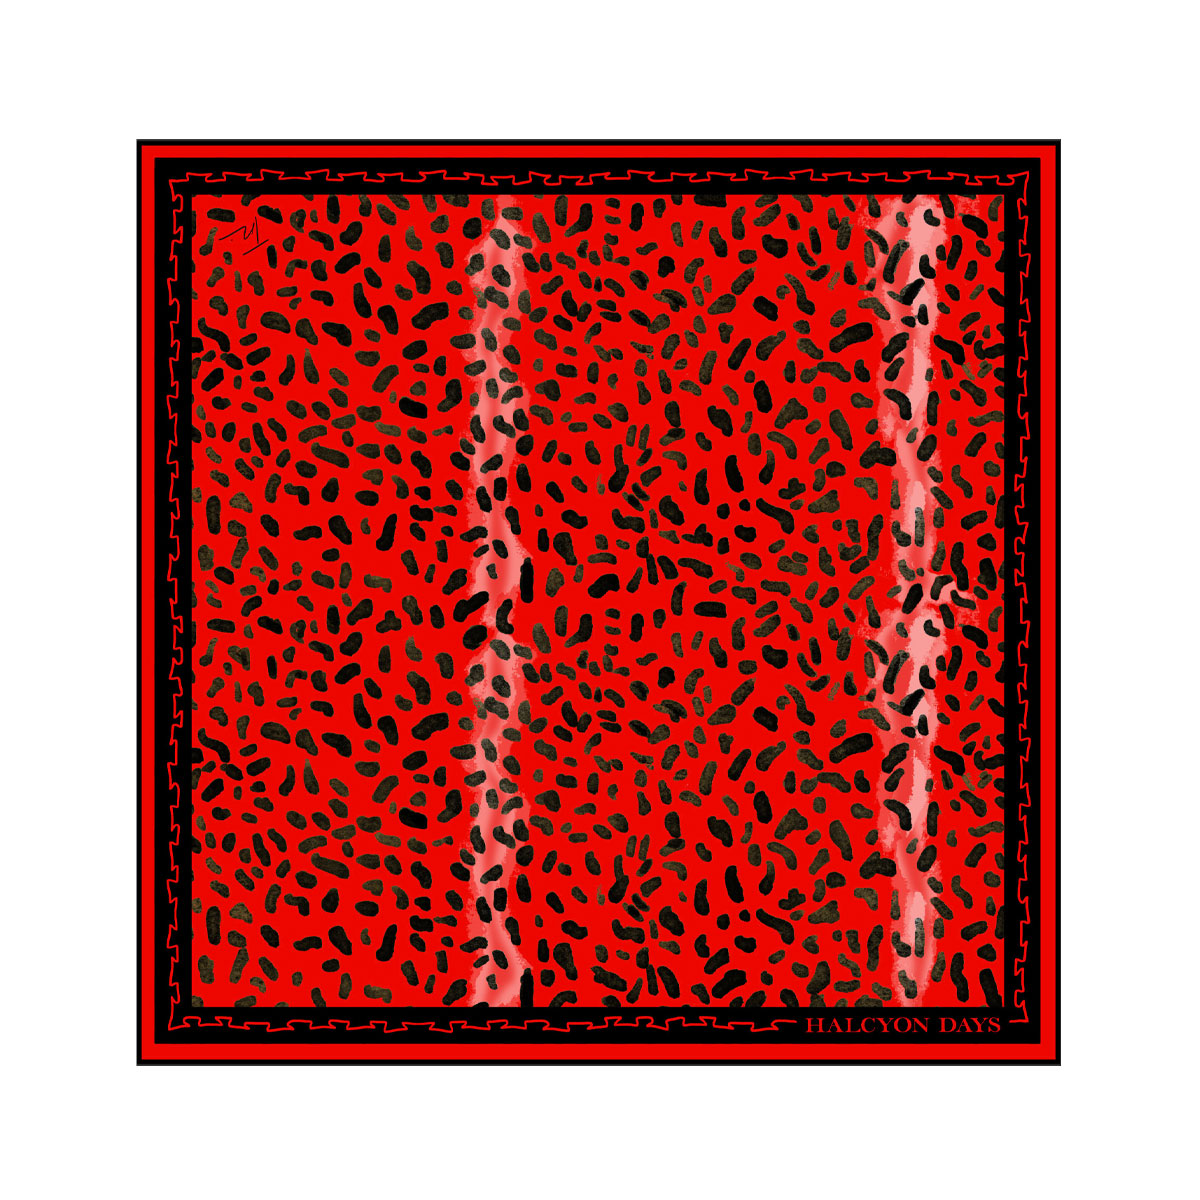 Halcyon Days Leopard Red 90 x 90 100% Silk Scarf